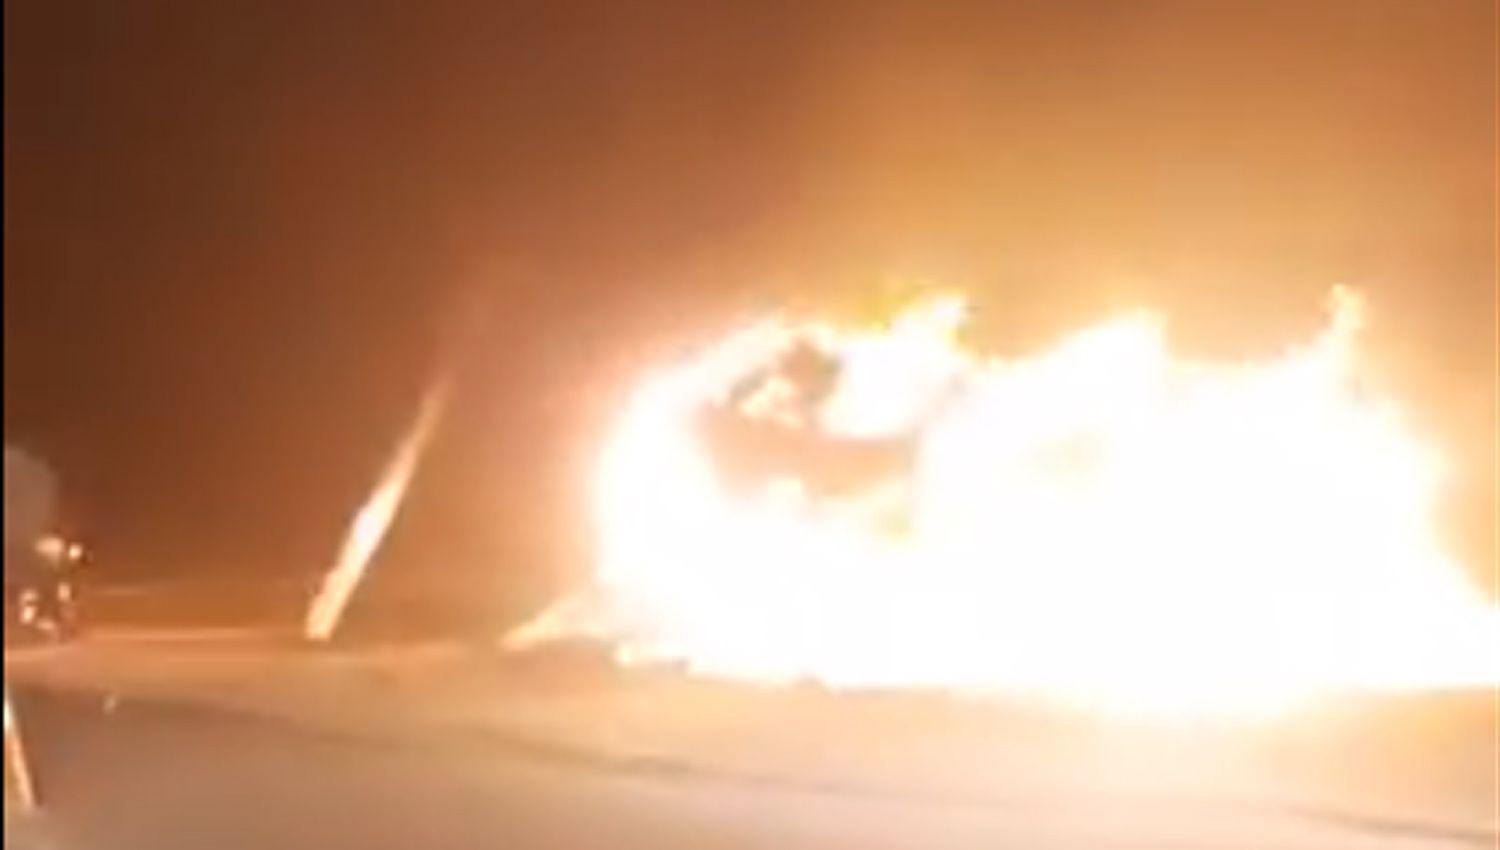 VIacuteDEO- Se incendioacute un camioacuten que transportaba carboacuten por Ruta Nacional 34